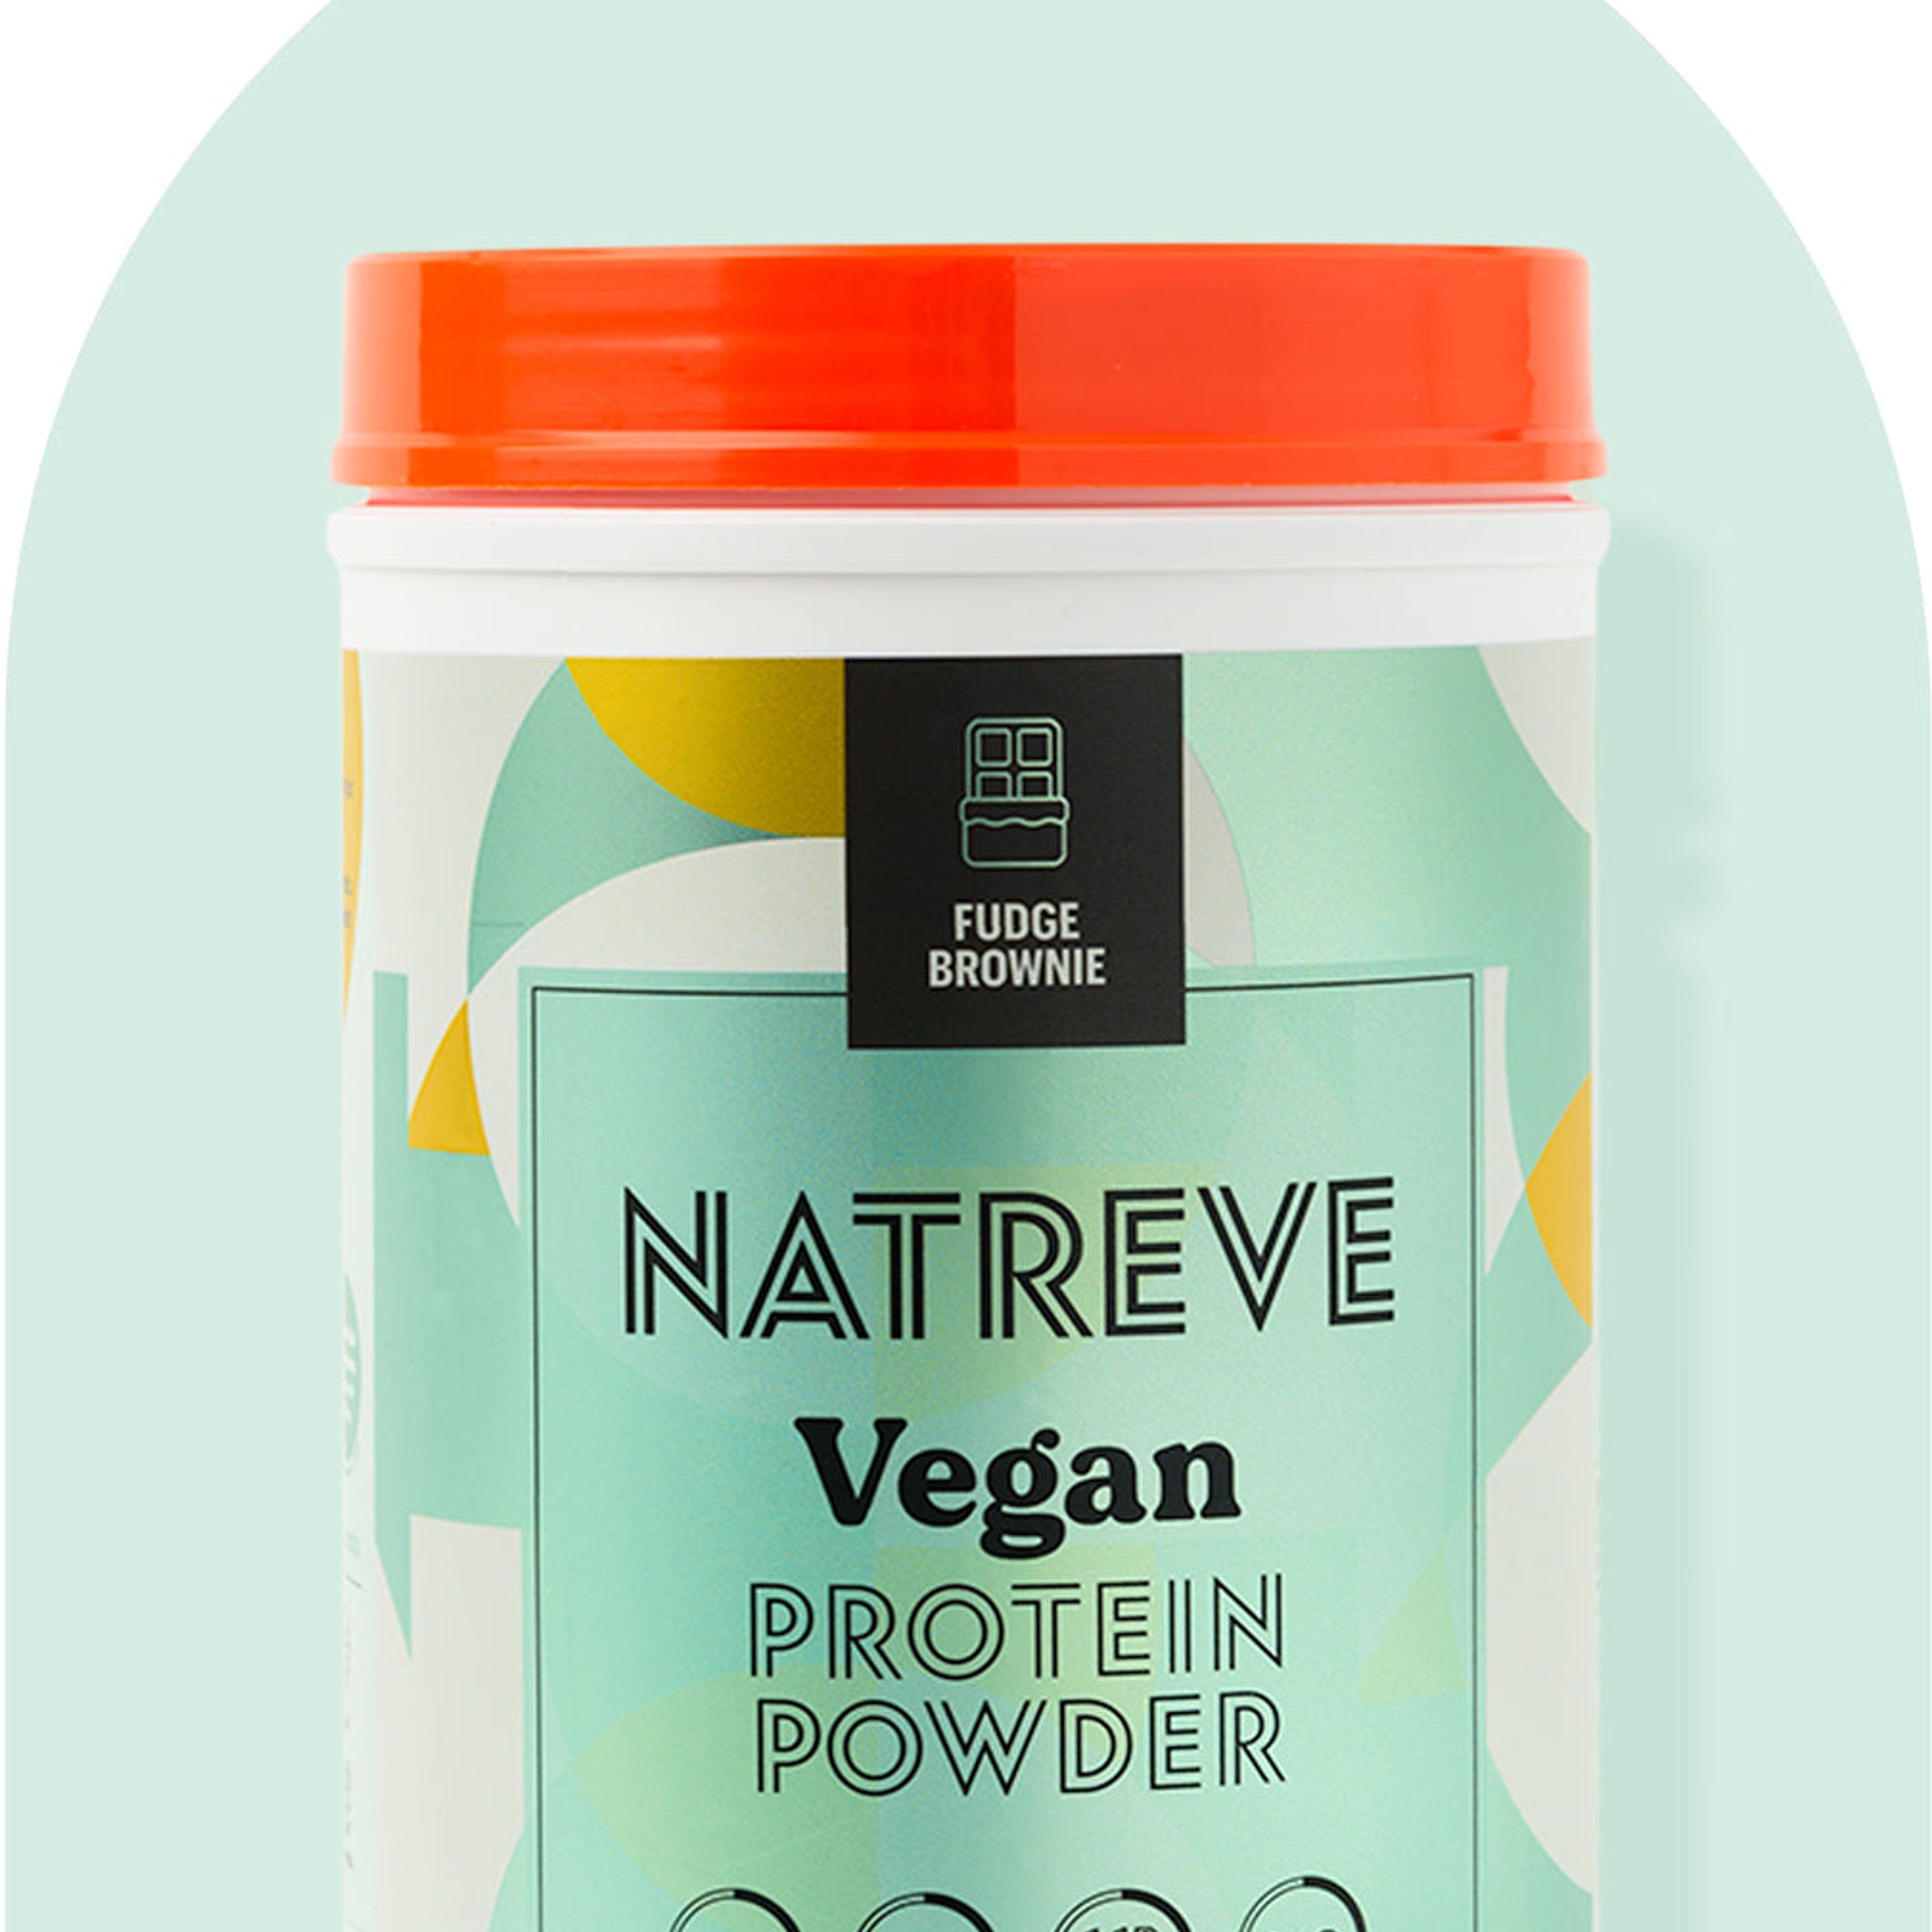 www.natreve.com/products/vegan-fudge-brownie